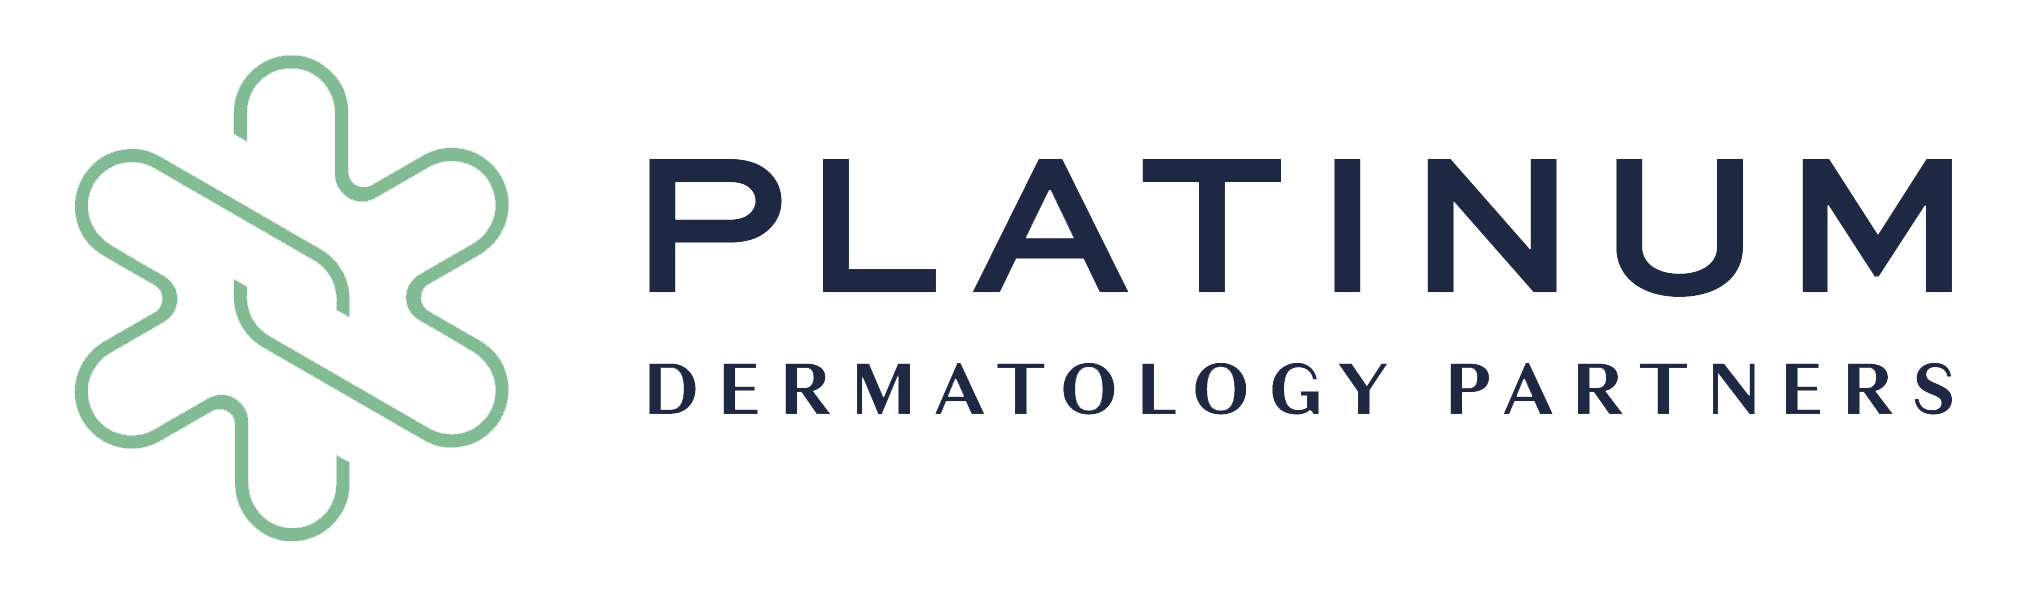 Platinum Dermatology